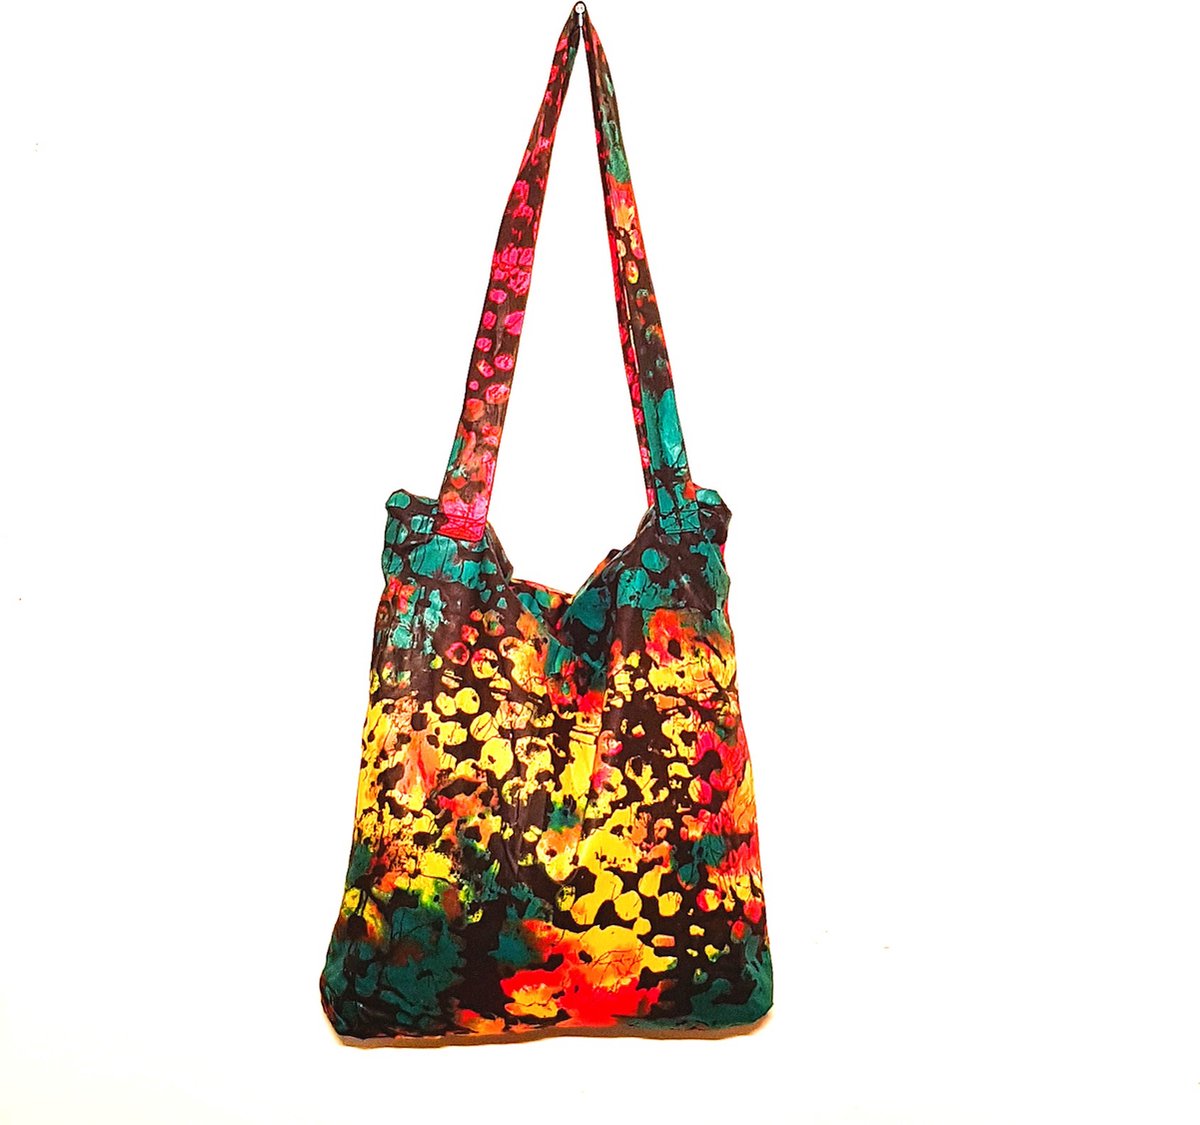 Ladybag ǀ Tote bag ǀ Shoppertas - Tropical - Kitenge - Handmade